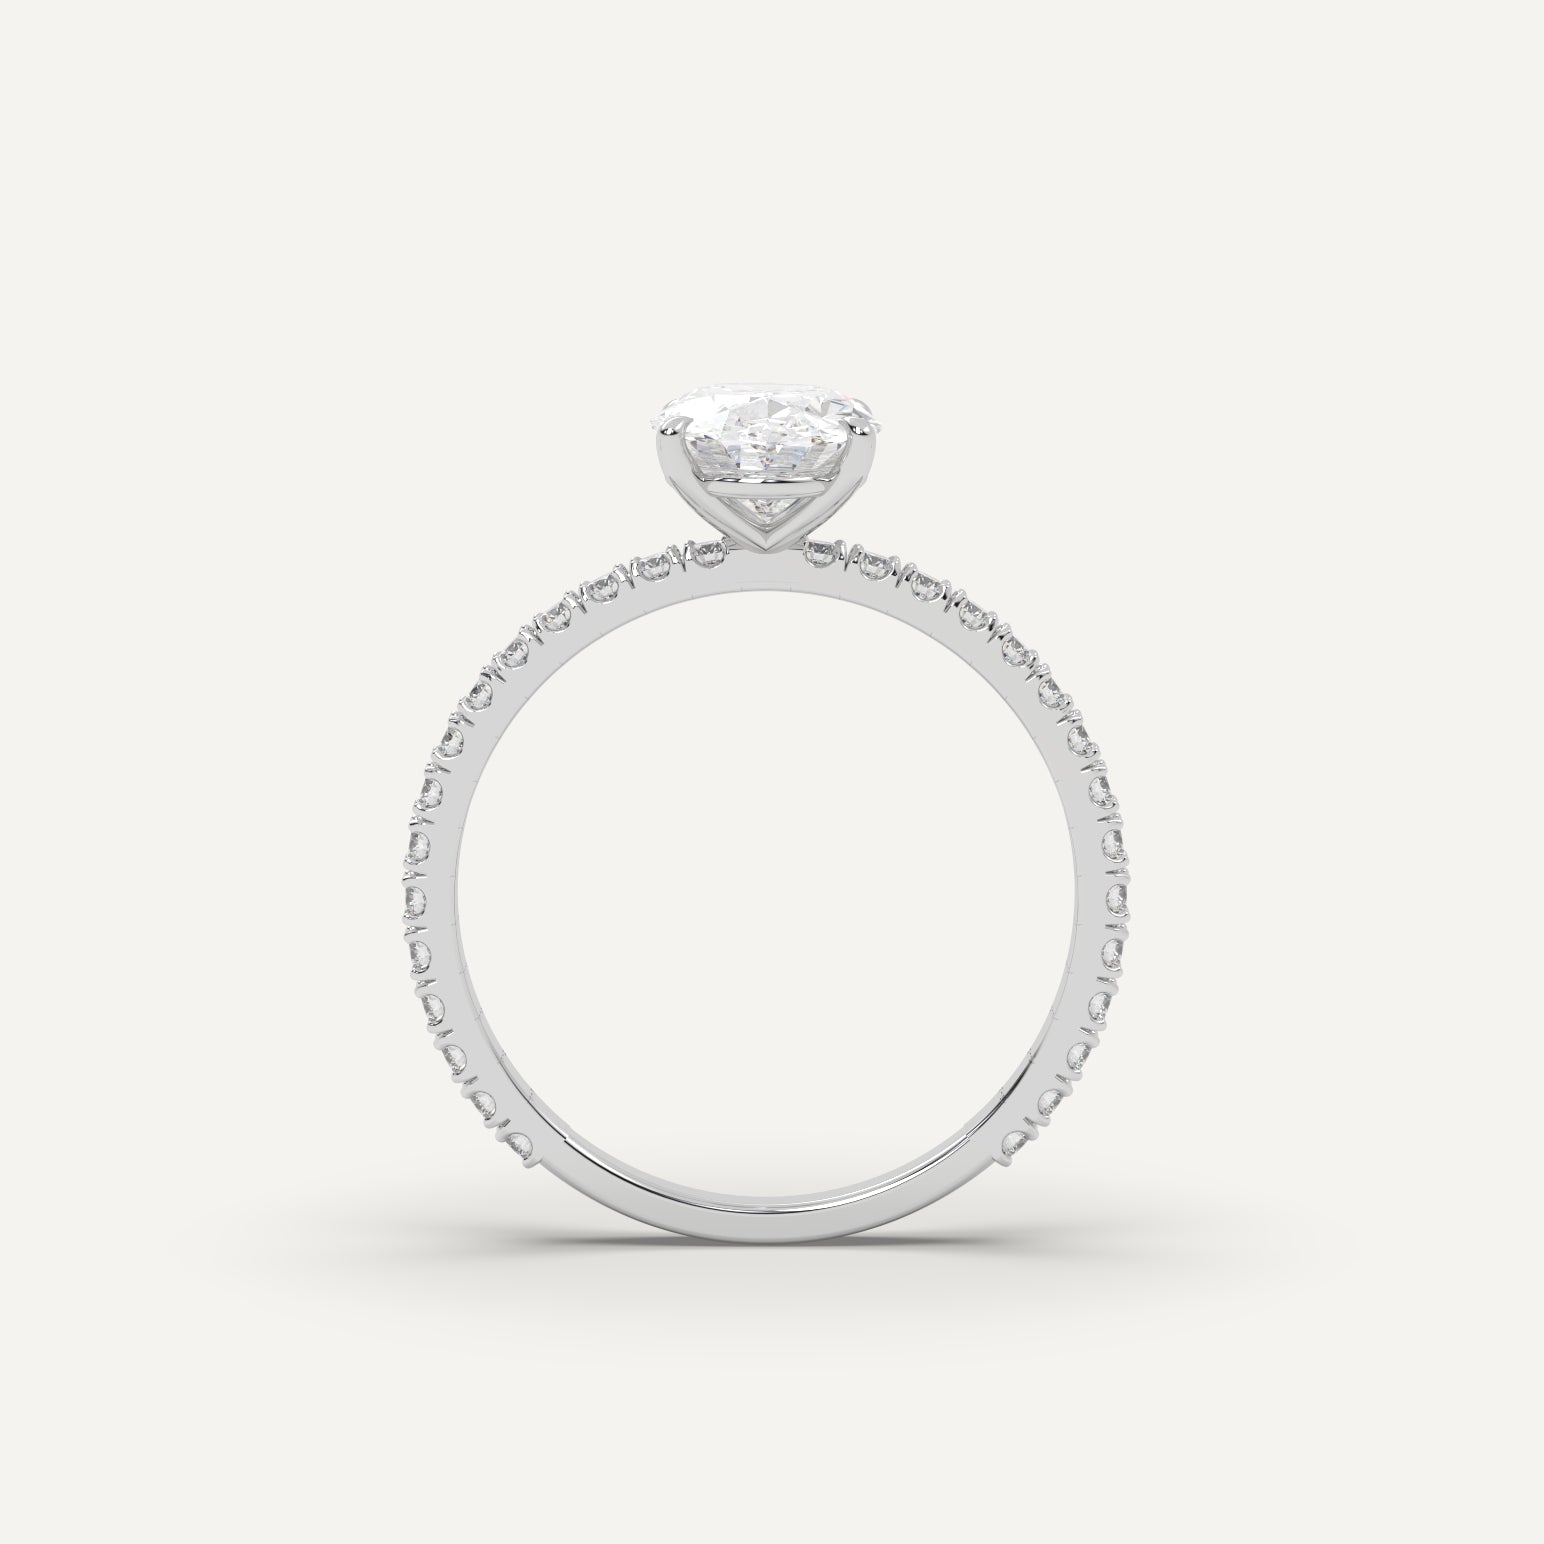 Oval Cut Diamond Engagement Ring - 1 carat